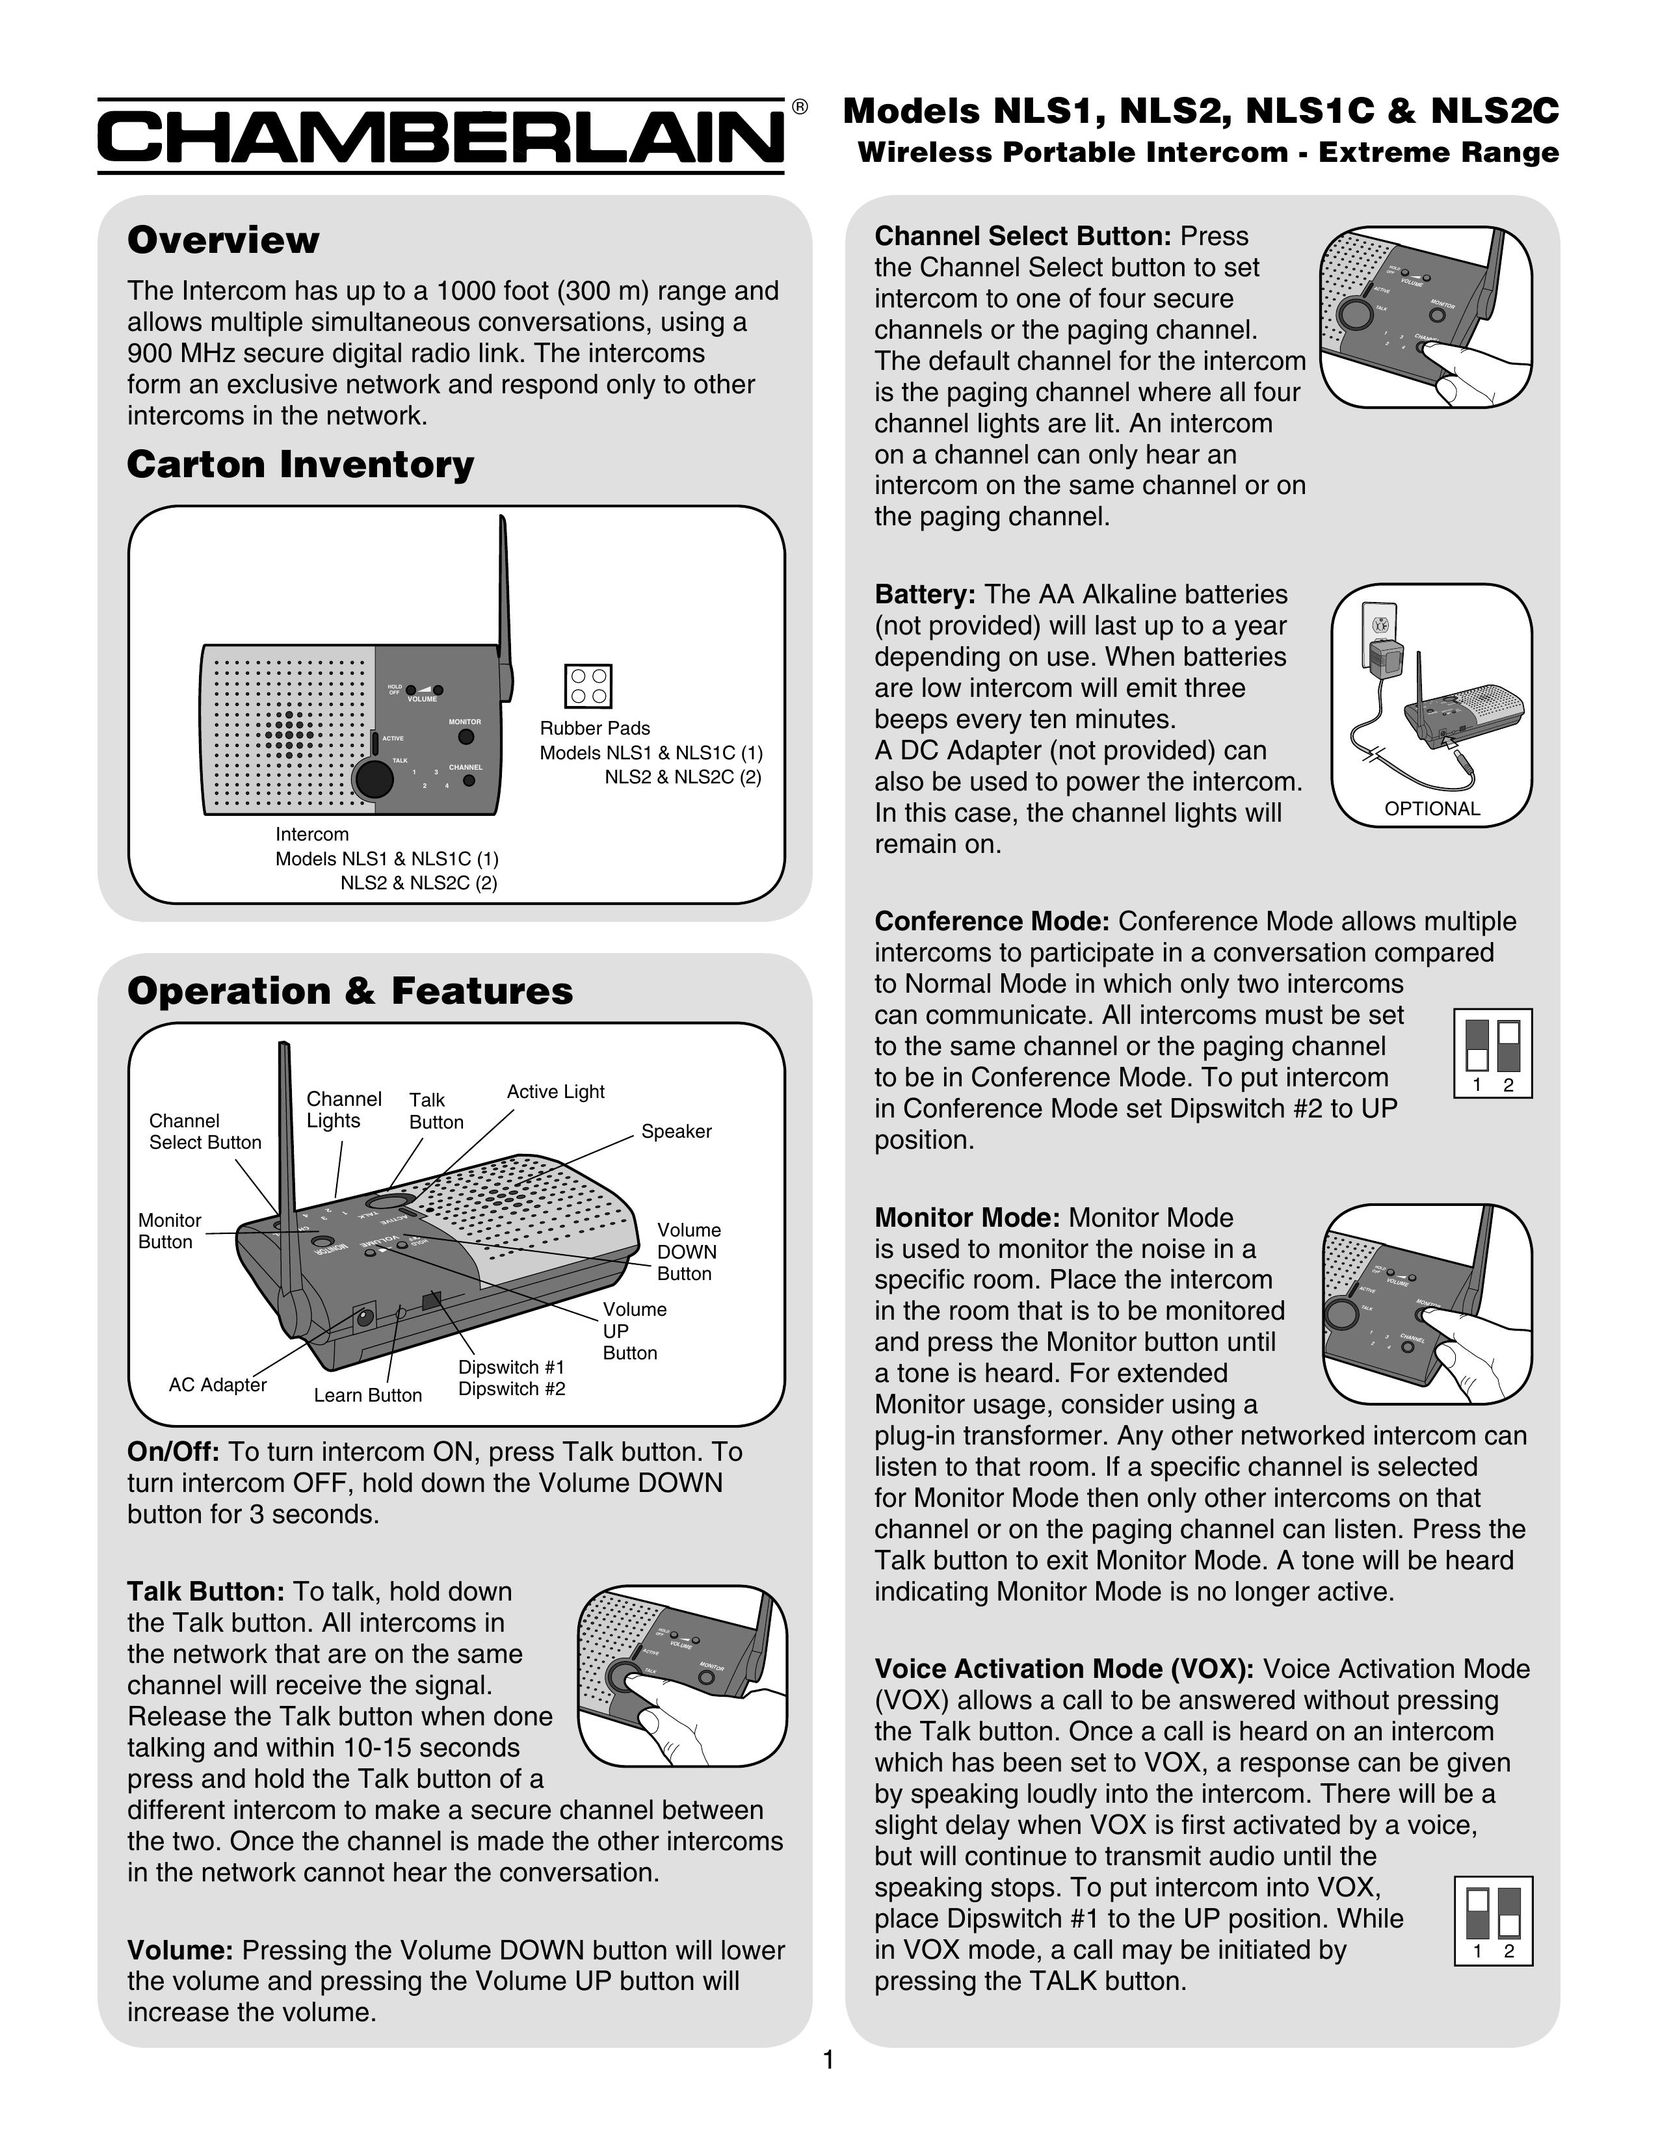 Chamberlain NLS1C Intercom System User Manual